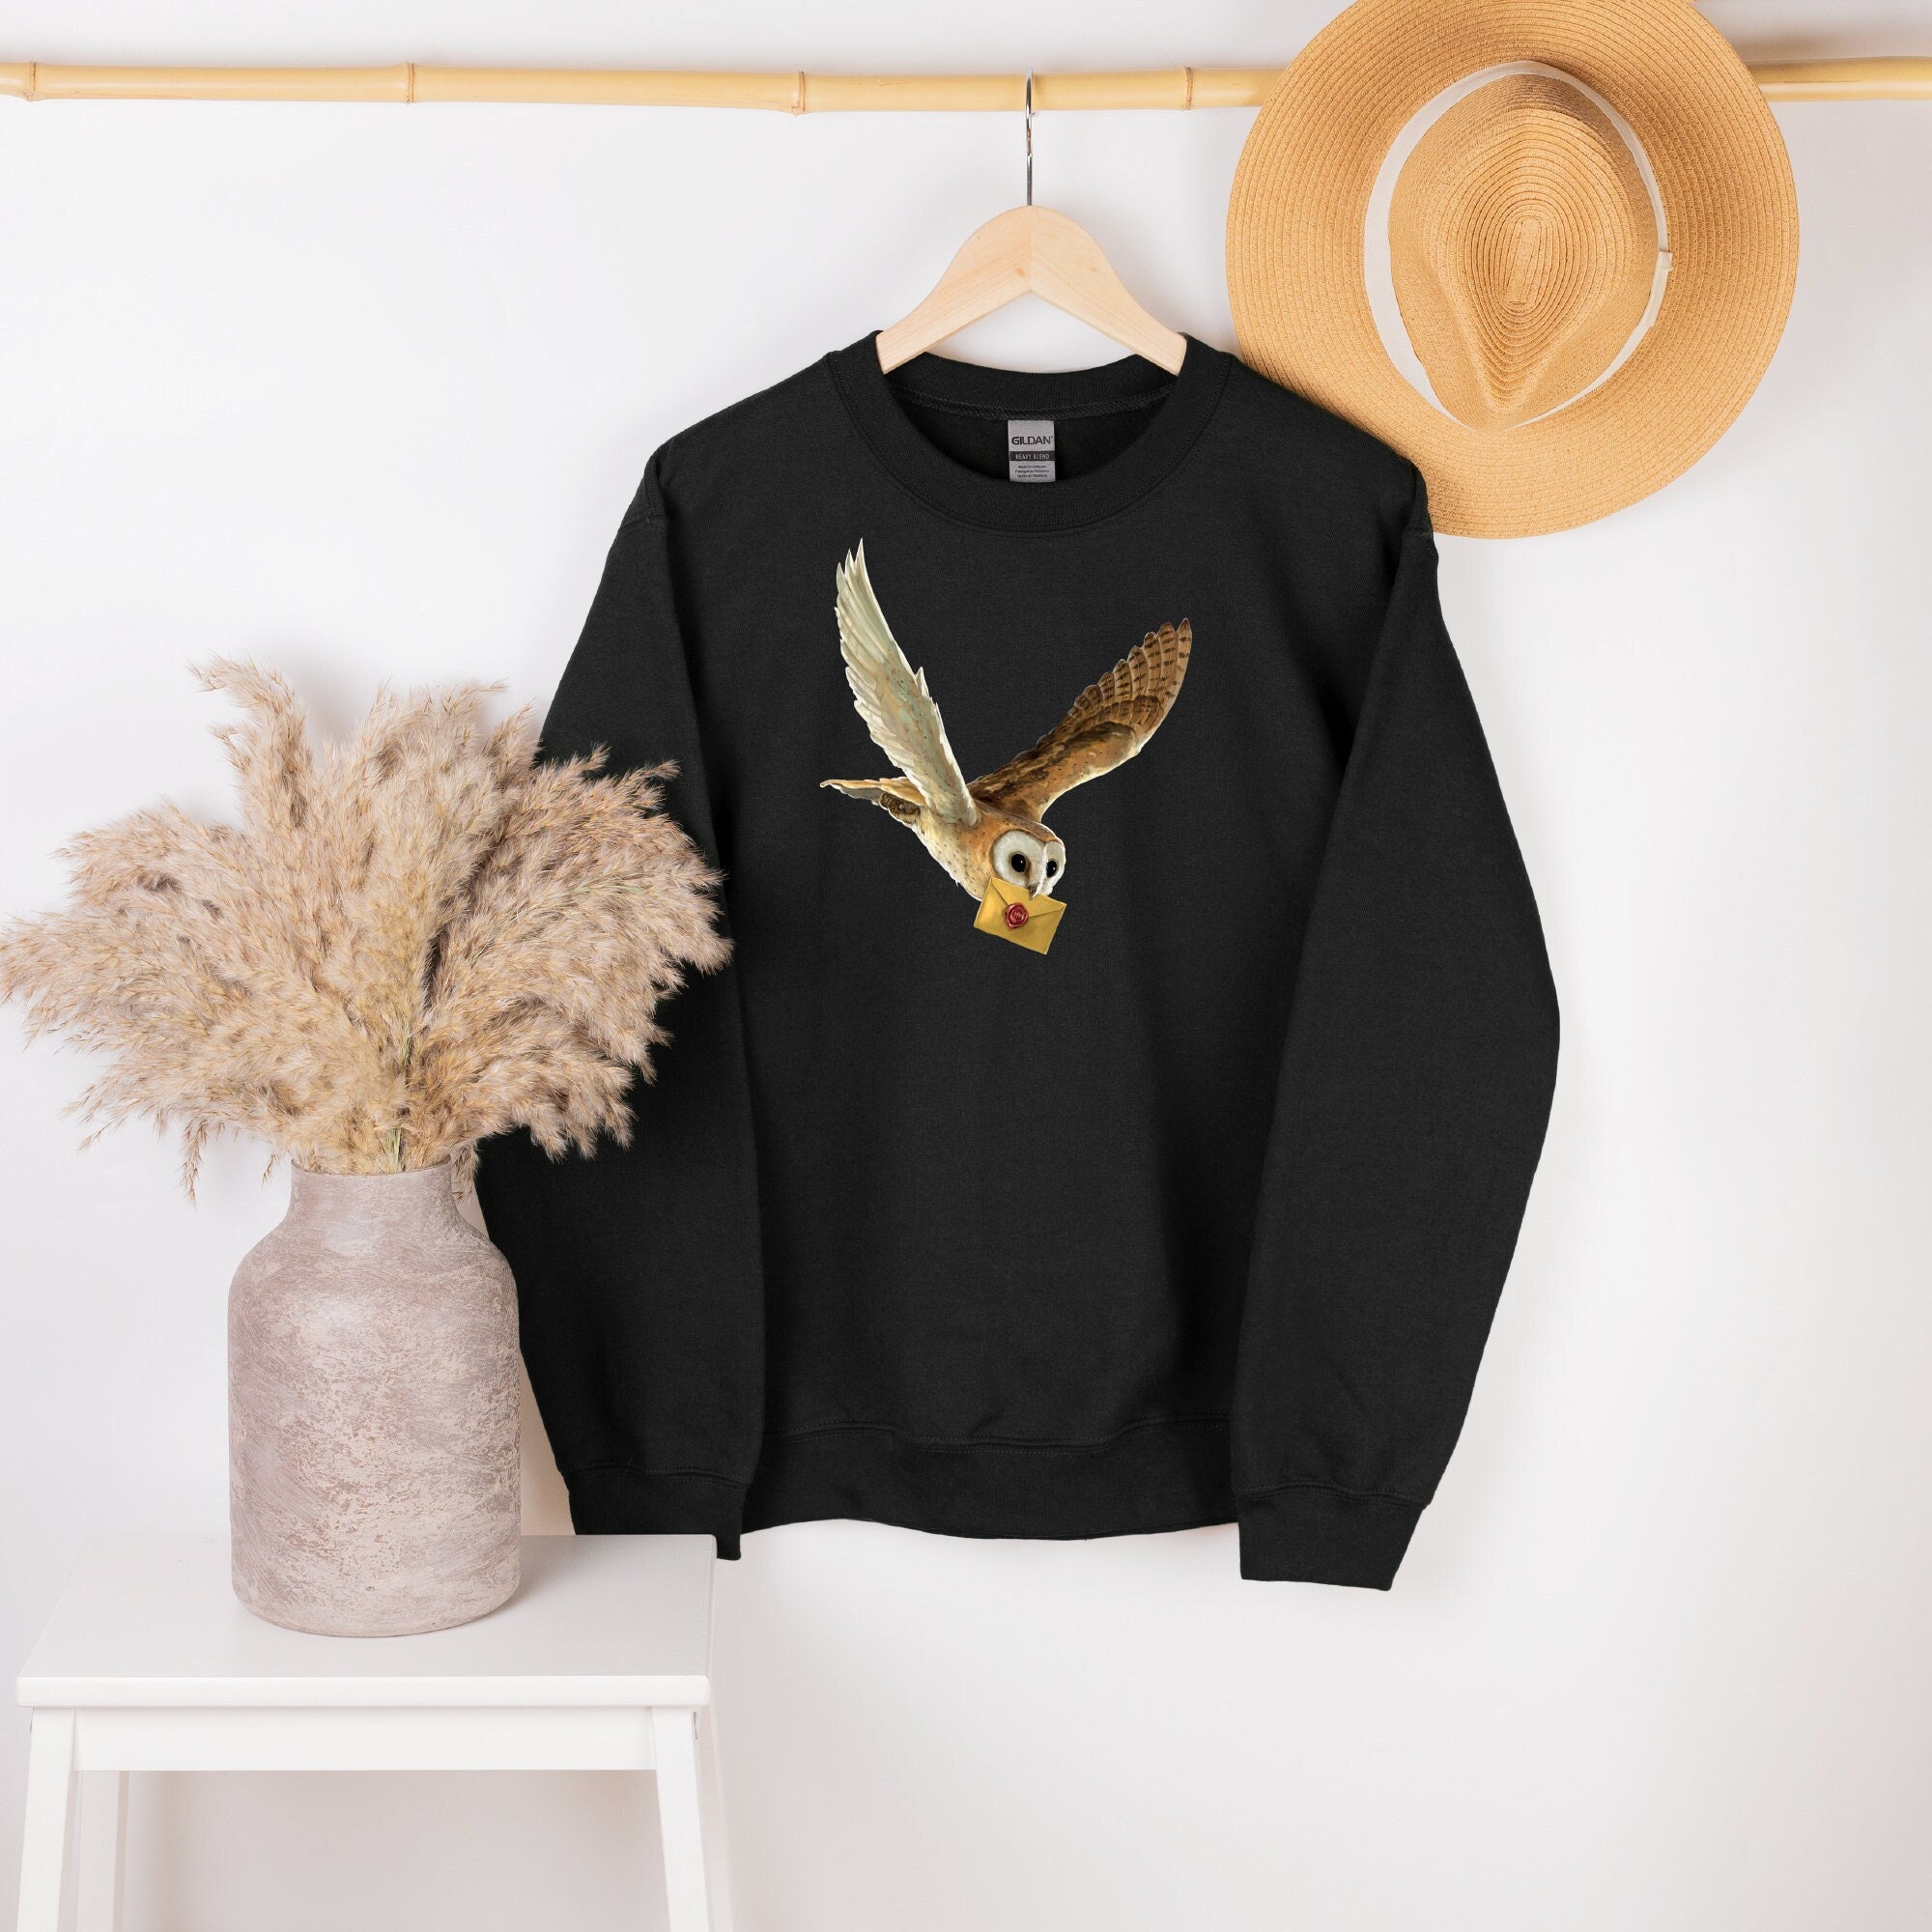 Owl Sweatshirt, Womens Owl Shirt, Owl Lover Gift, Nature Shirt, Adventure Shirt, Animal Lover, Unise